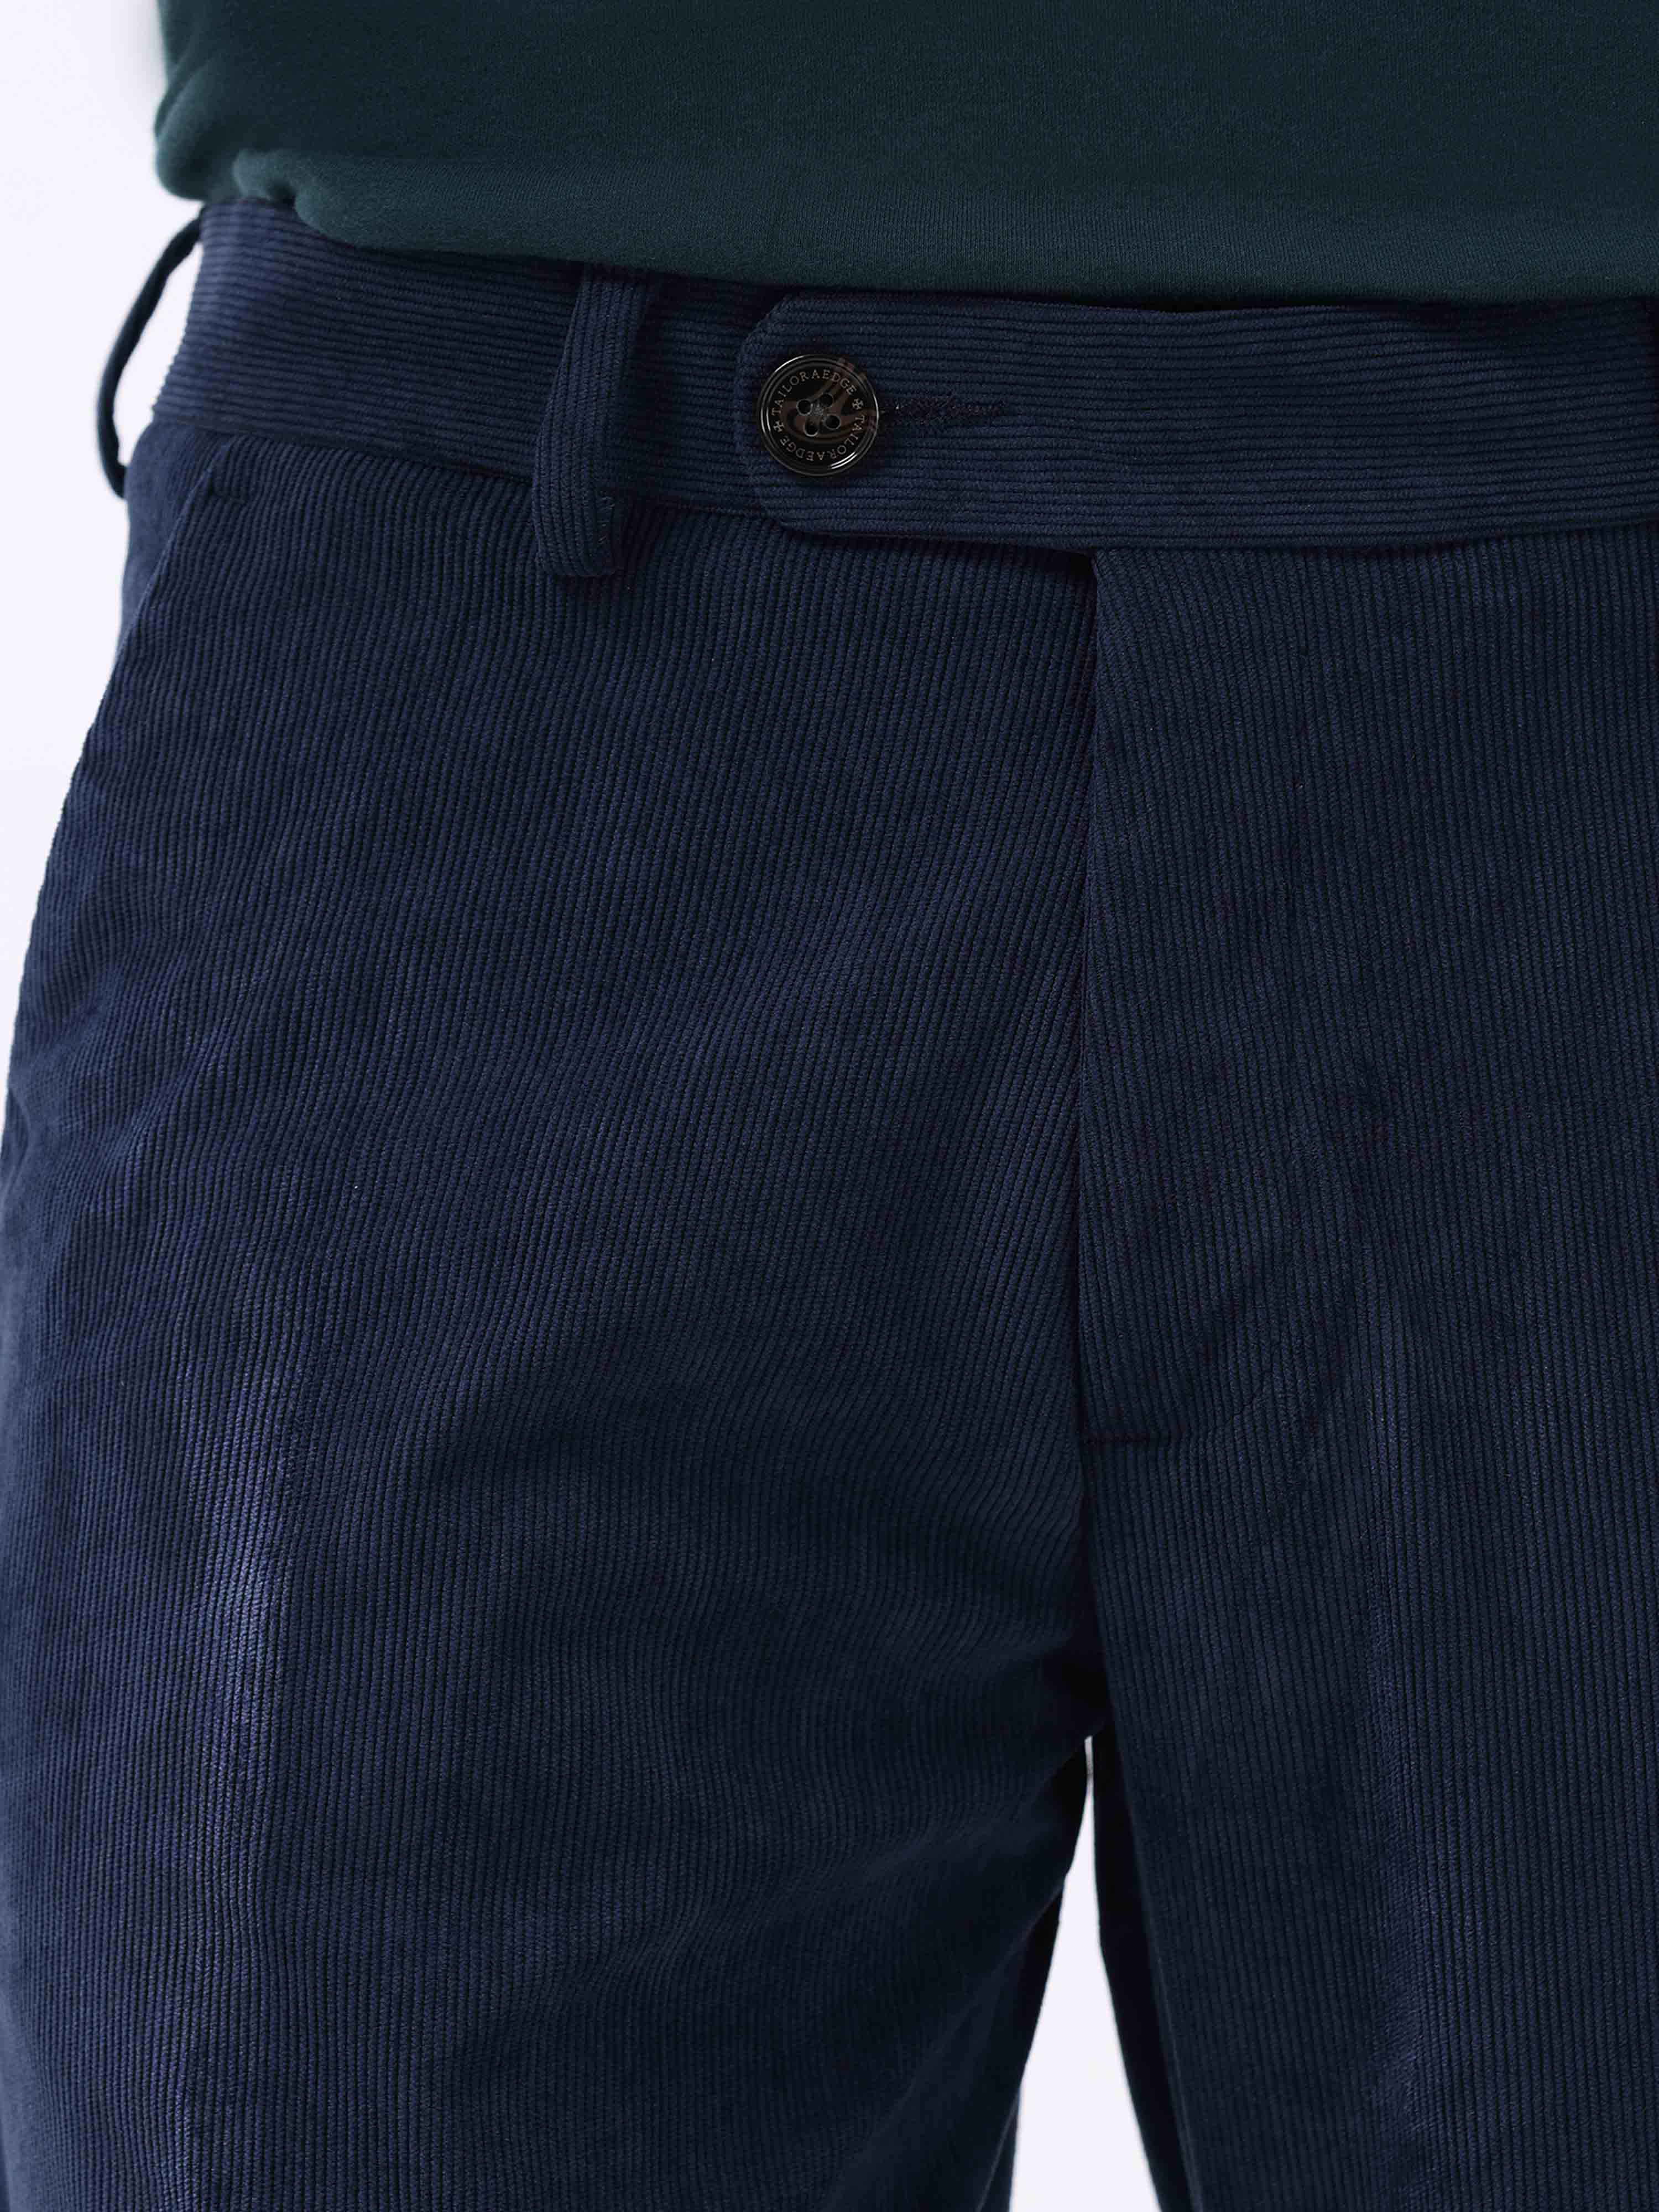 Blue corduroy trousers BRIGLIA 1949 F/W 22-23 - Rione Fontana